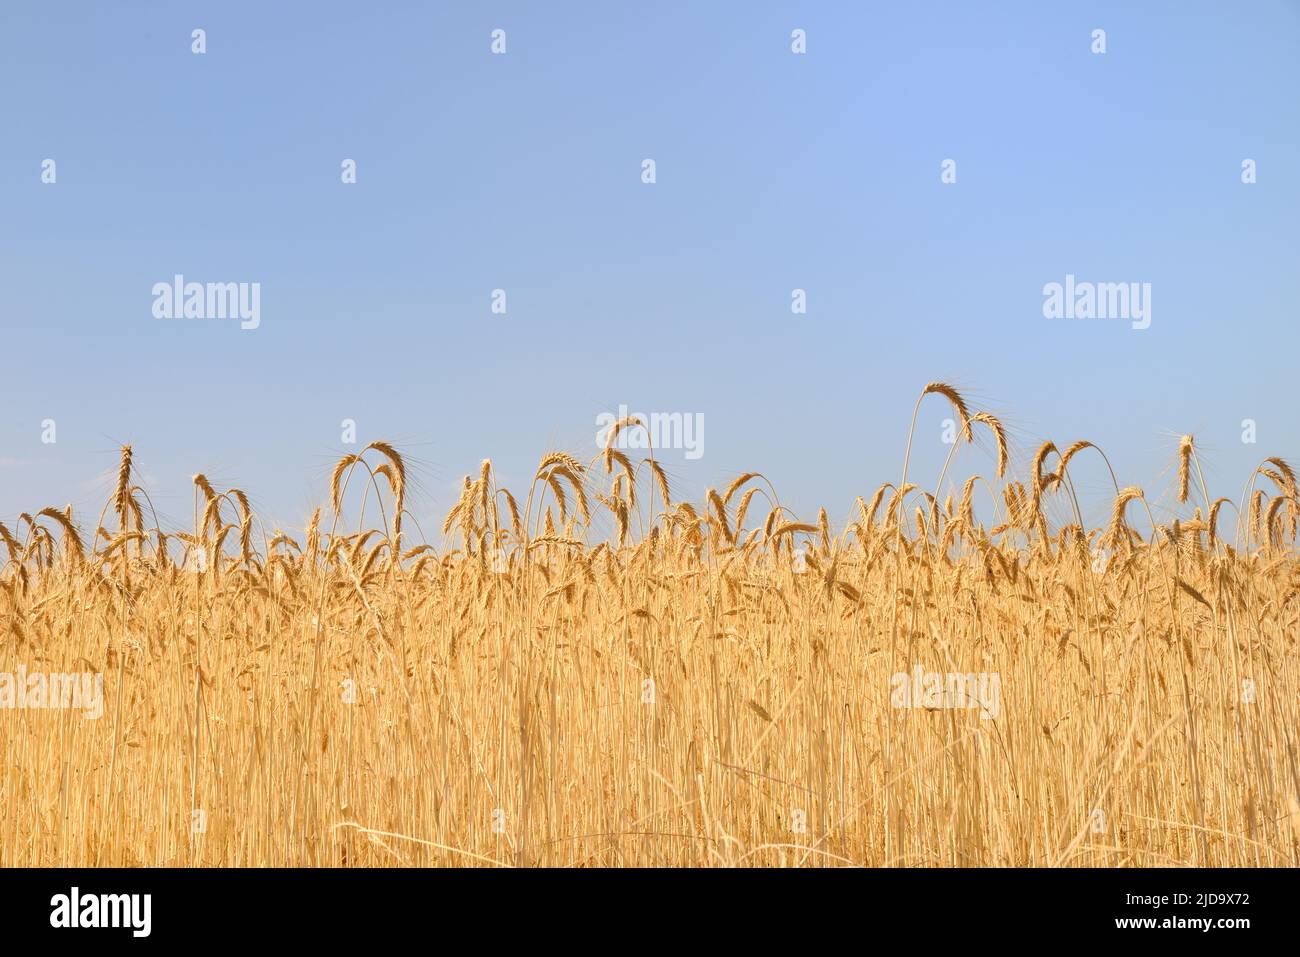 Campo de trigo amarillo - Bandera de ucrania Foto de stock